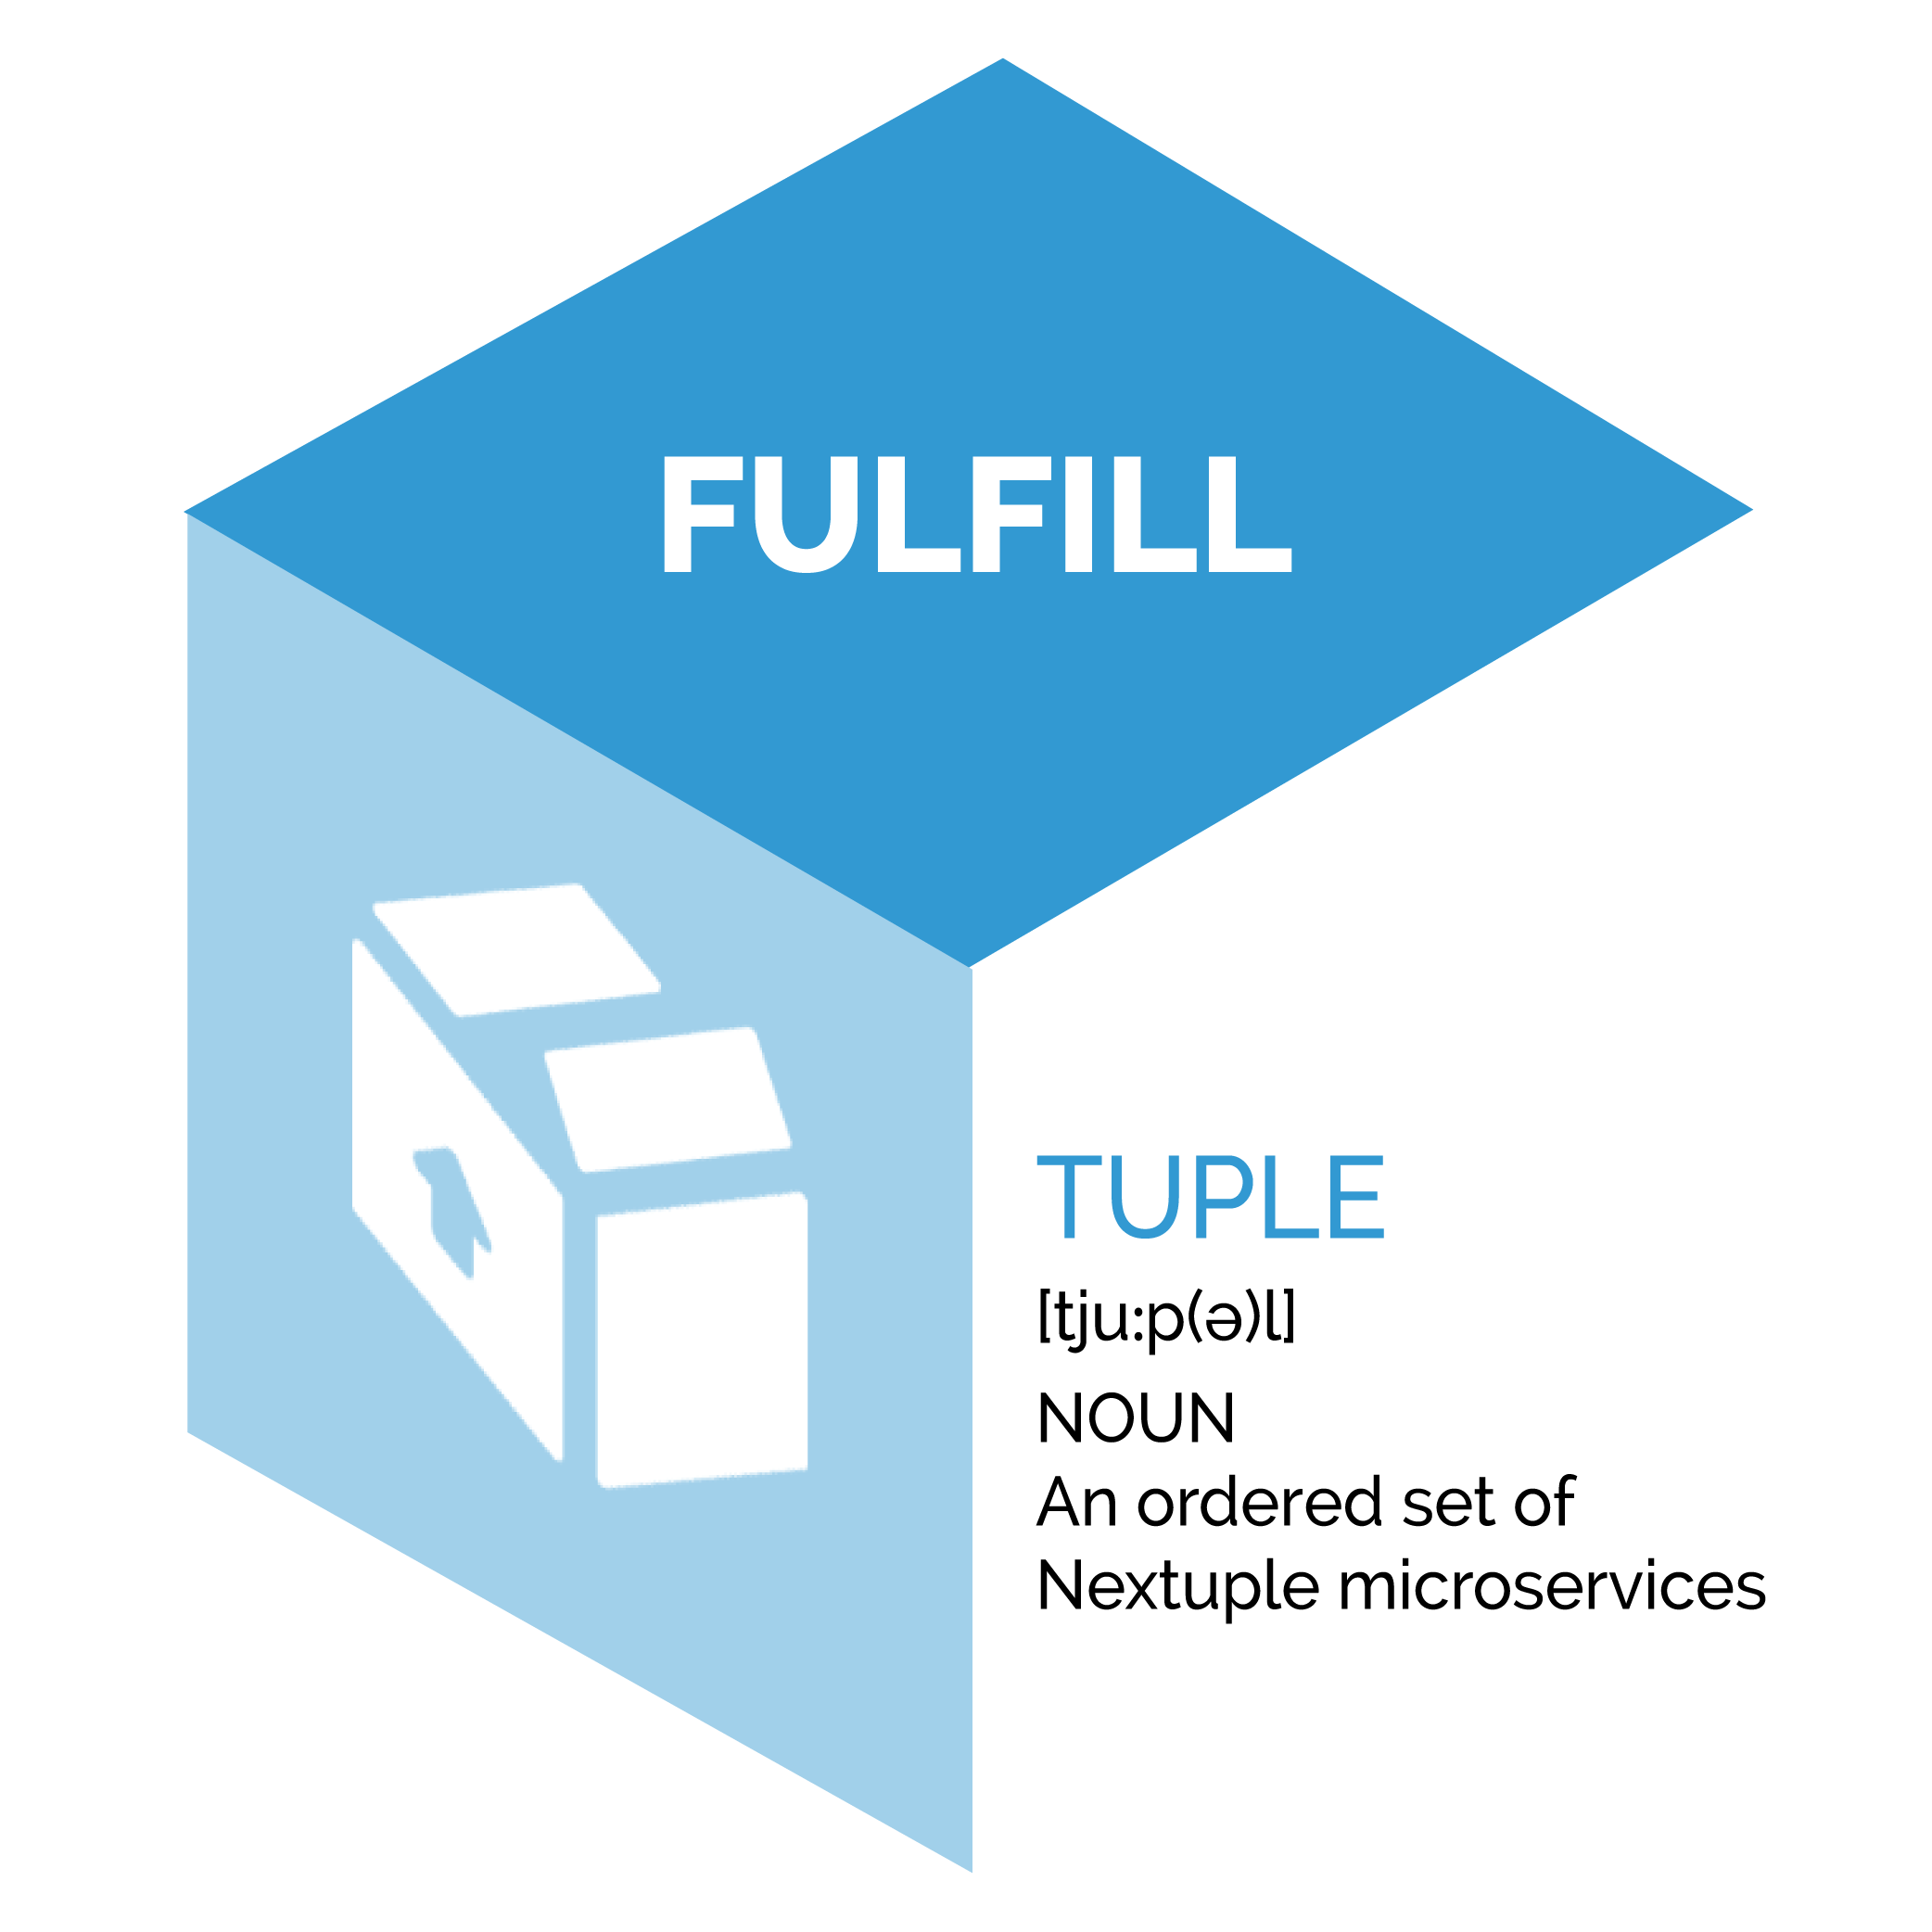 fulfill tuple image definition